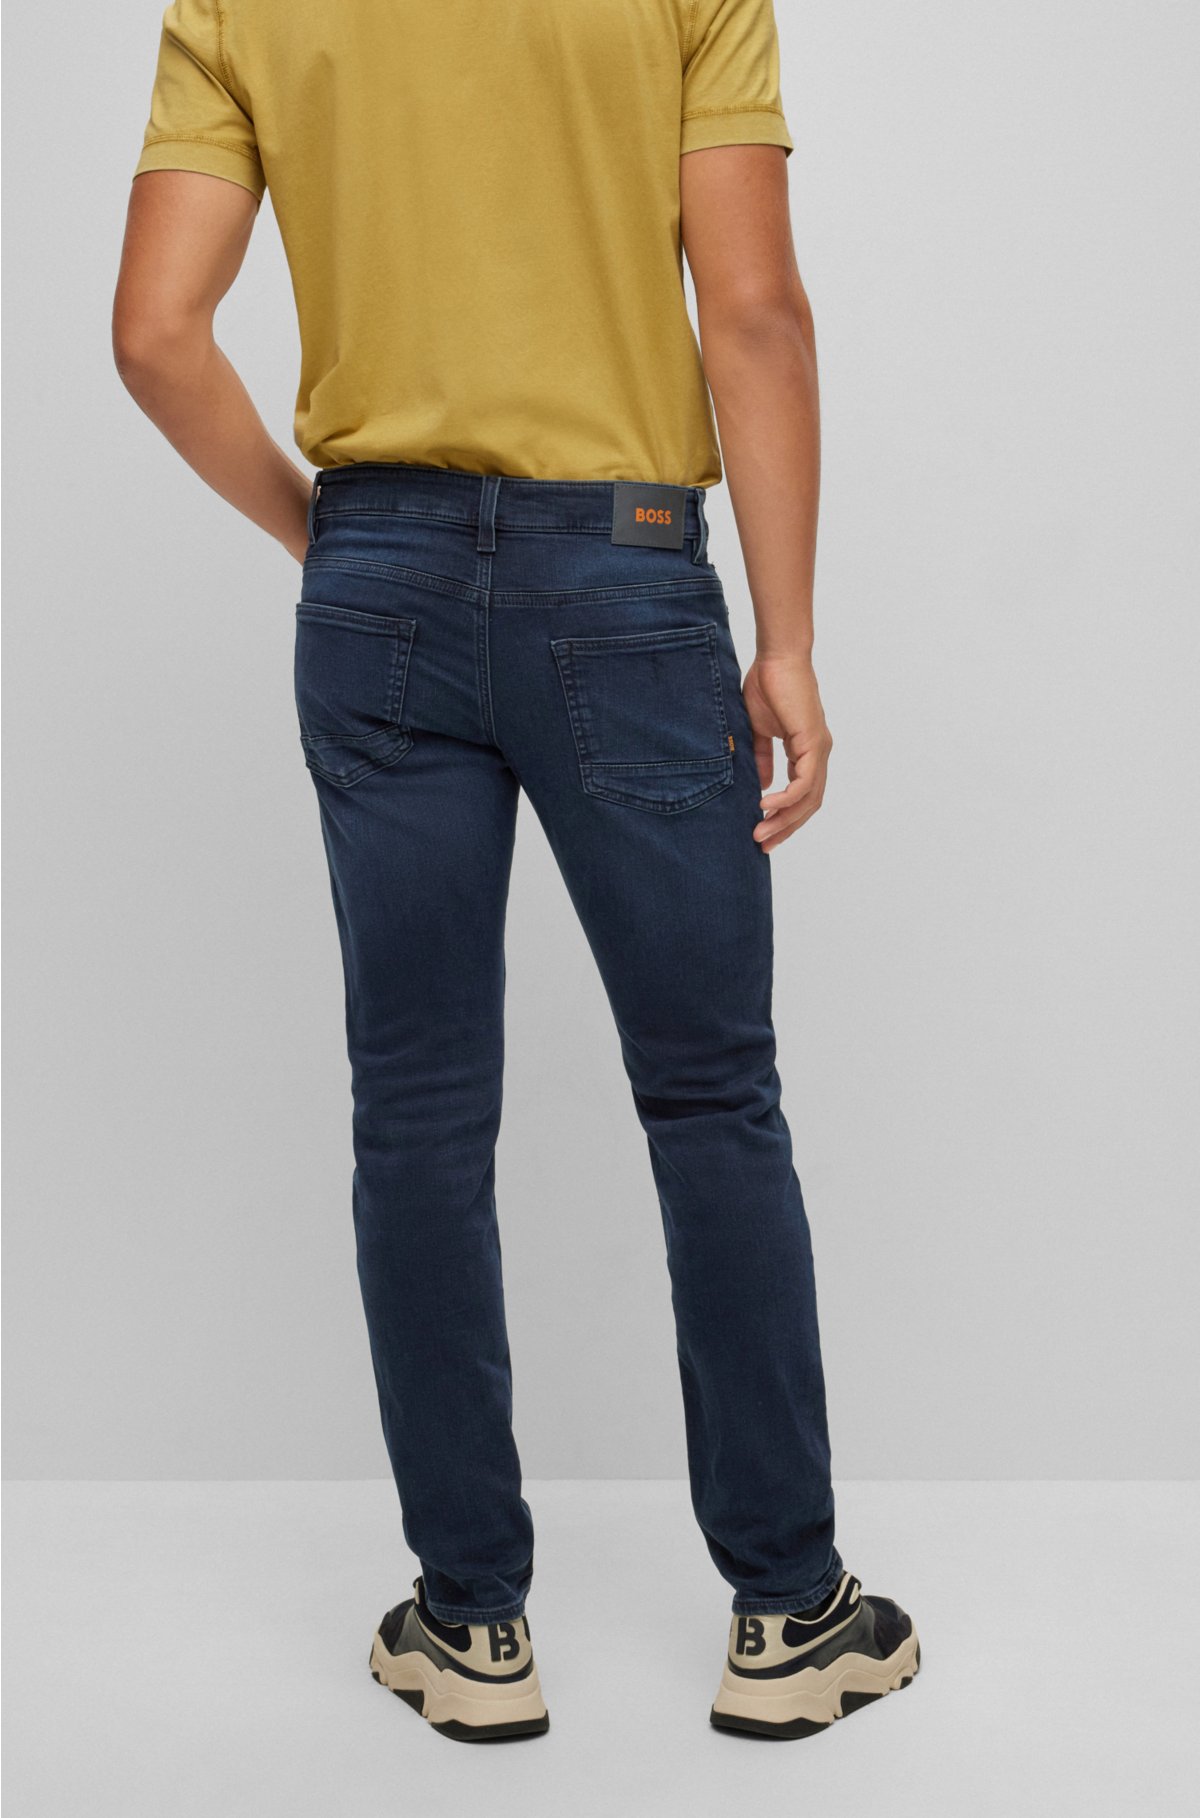 BOSS Slim-fit jeans blue-black comfort-stretch denim